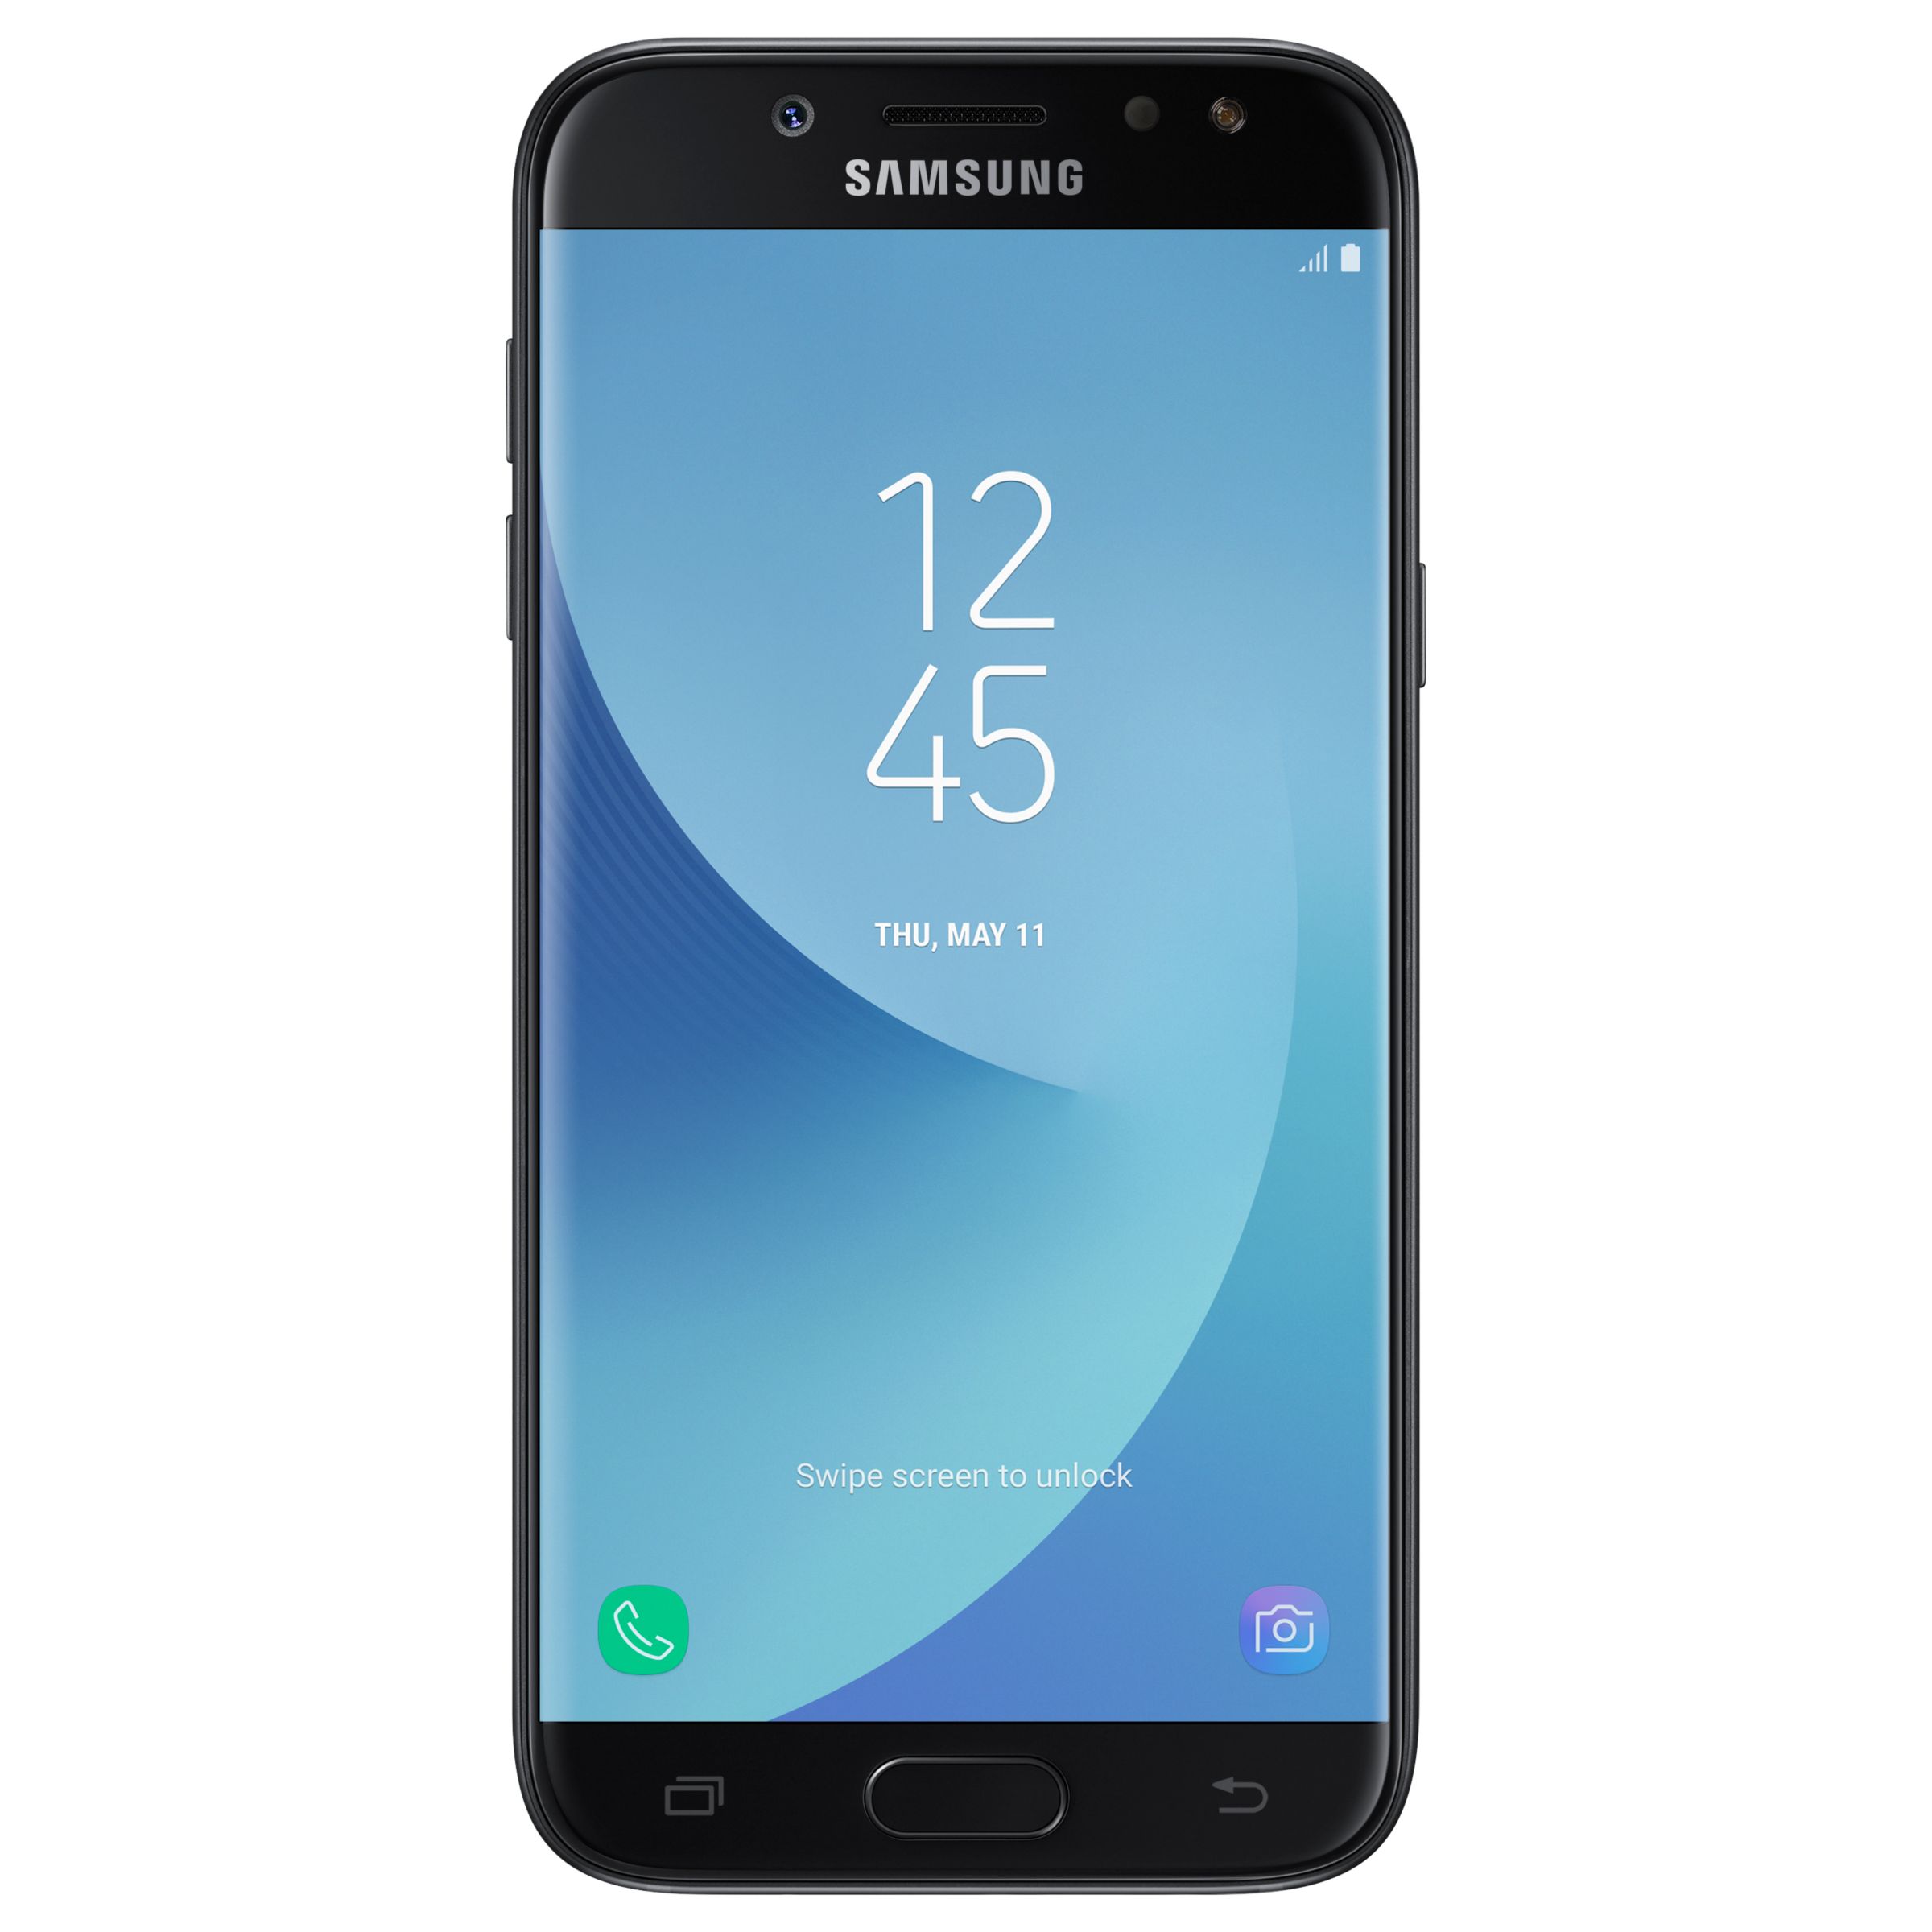 Samsung Galaxy J5 Smartphone (2017), Android, 5.2, 4G LTE, SIM Free, 16GB